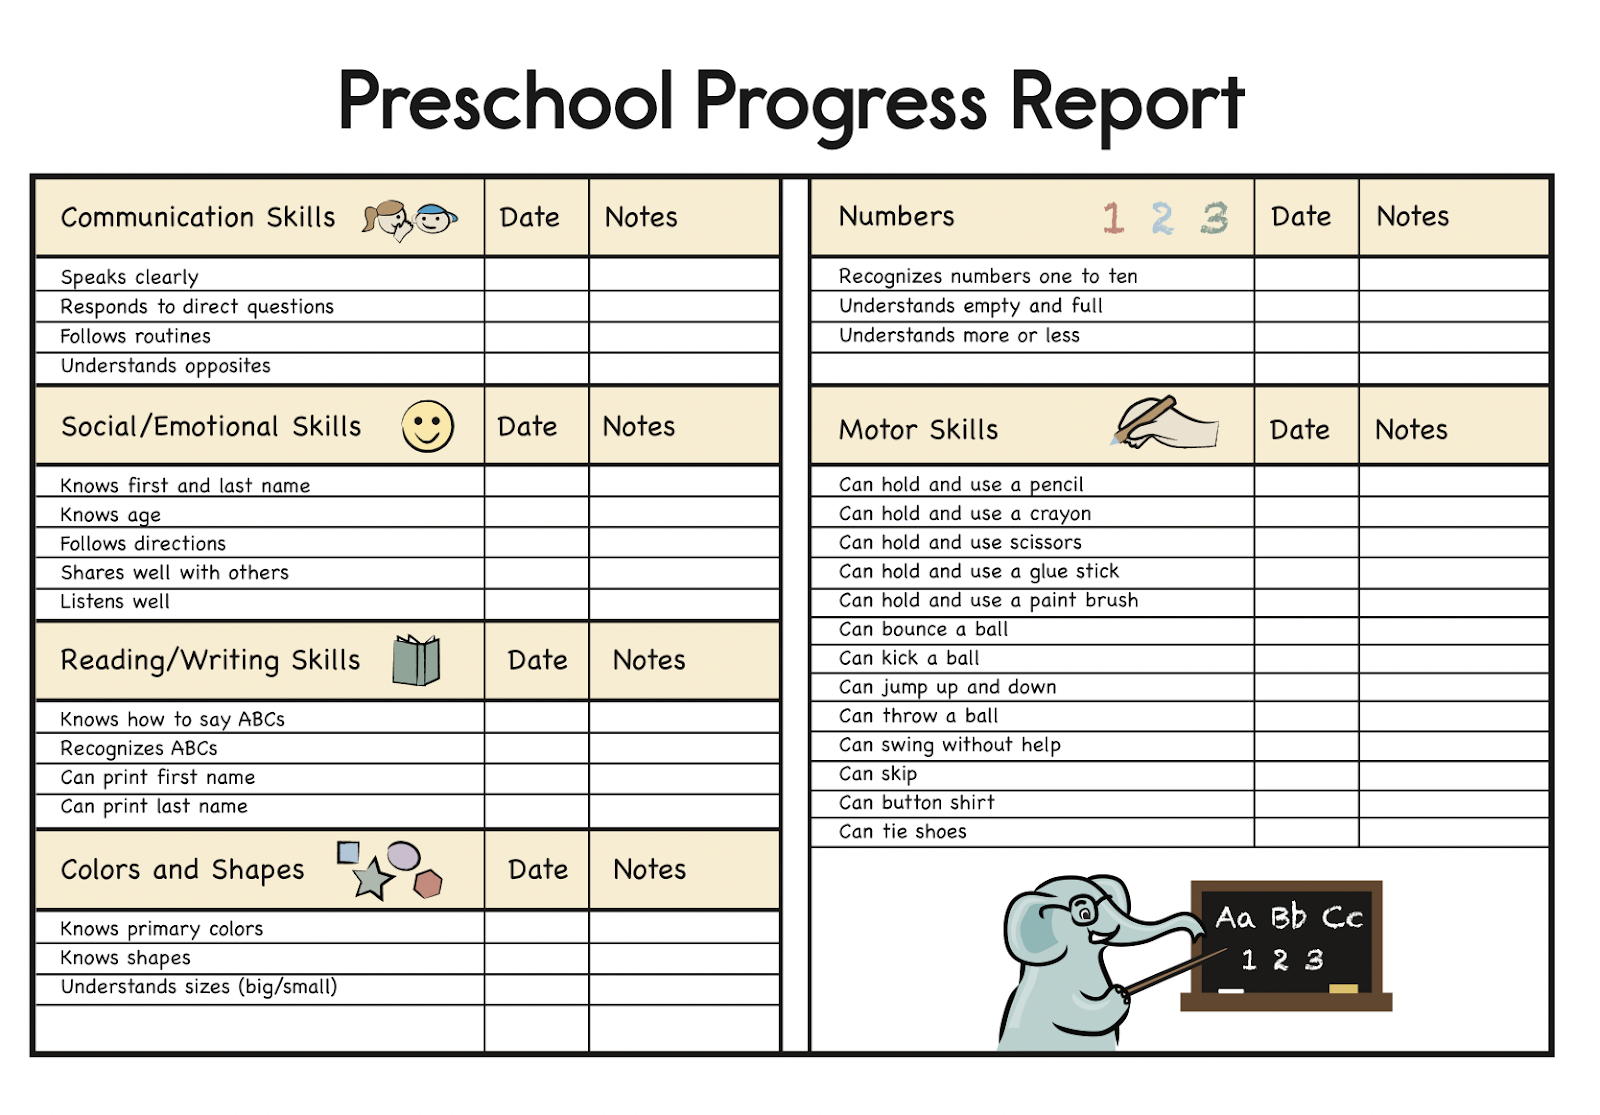 A Complete Guide to Preschool Progress Reports For Preschool Progress Report Template